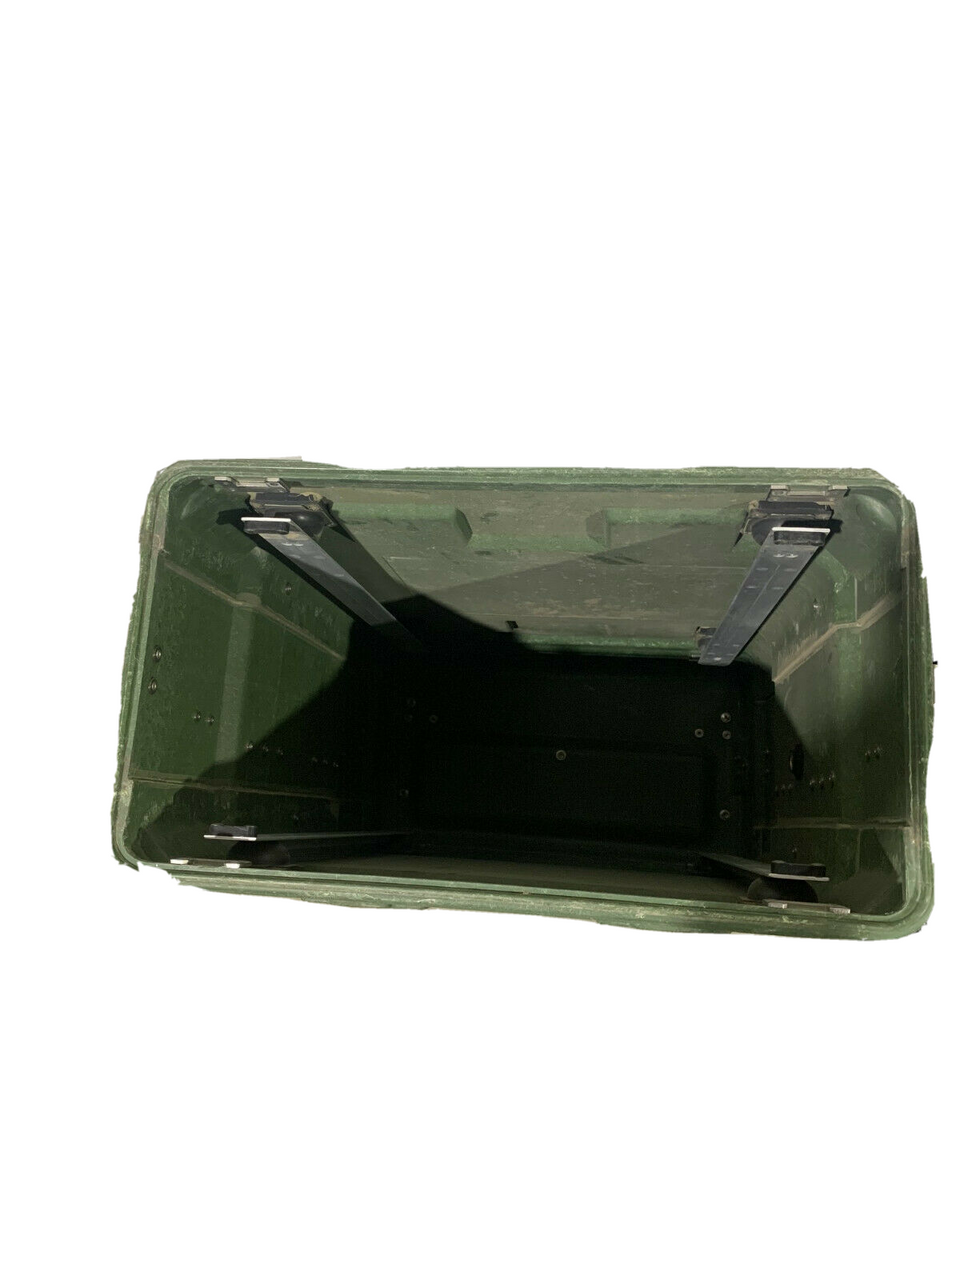 Pelican Hardigo MM24 E Container Military Box Case Storage Waterproof  49x25x22